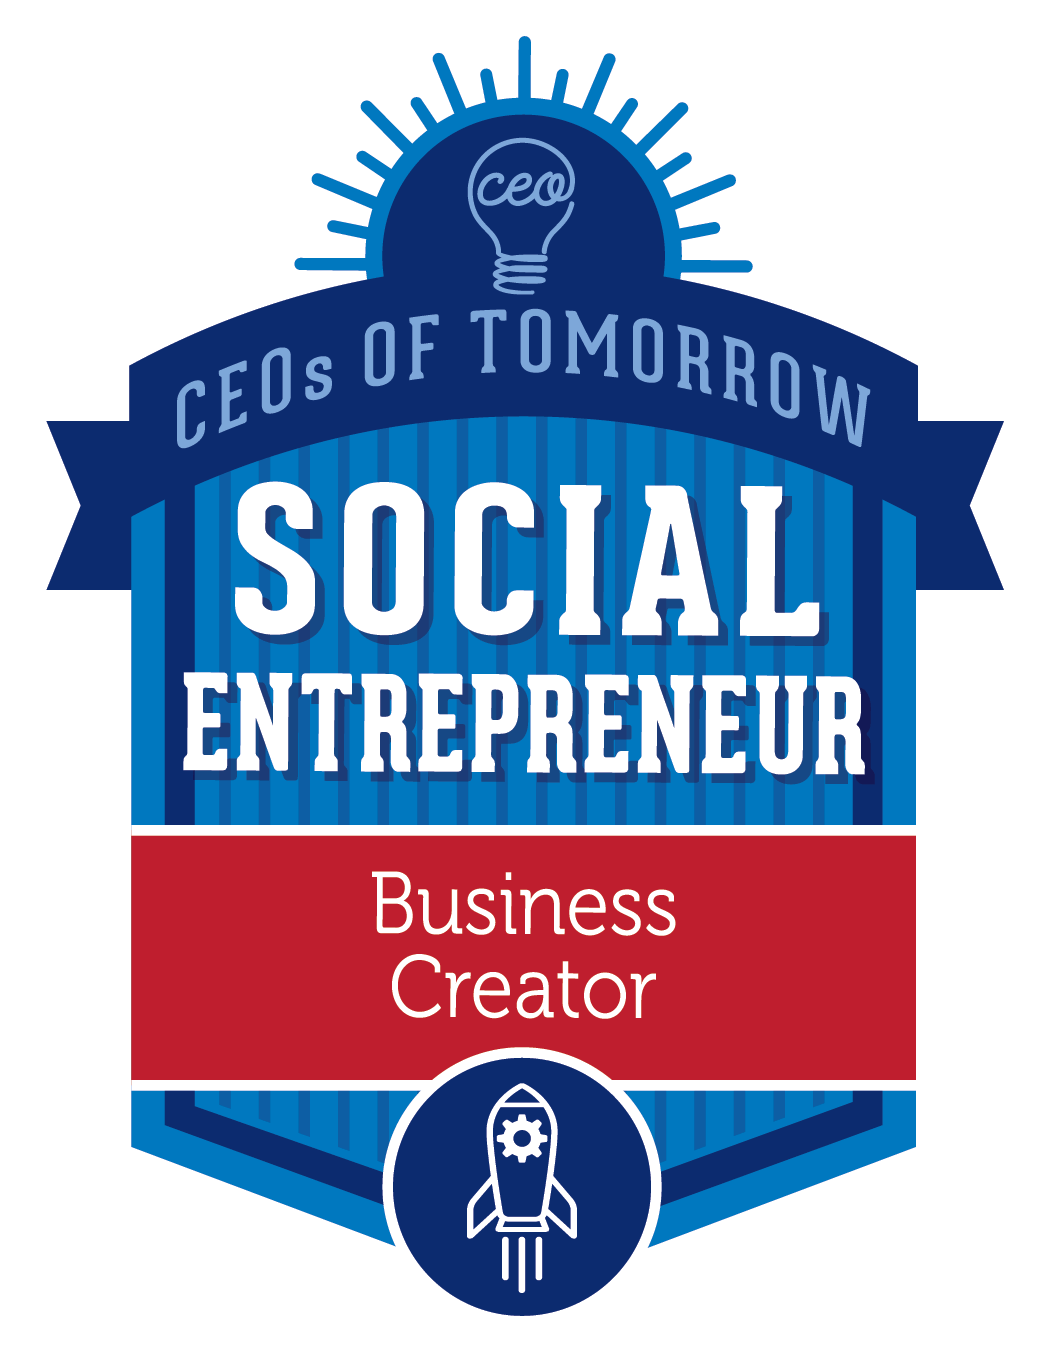 Social Entrepreneur - Business Creator